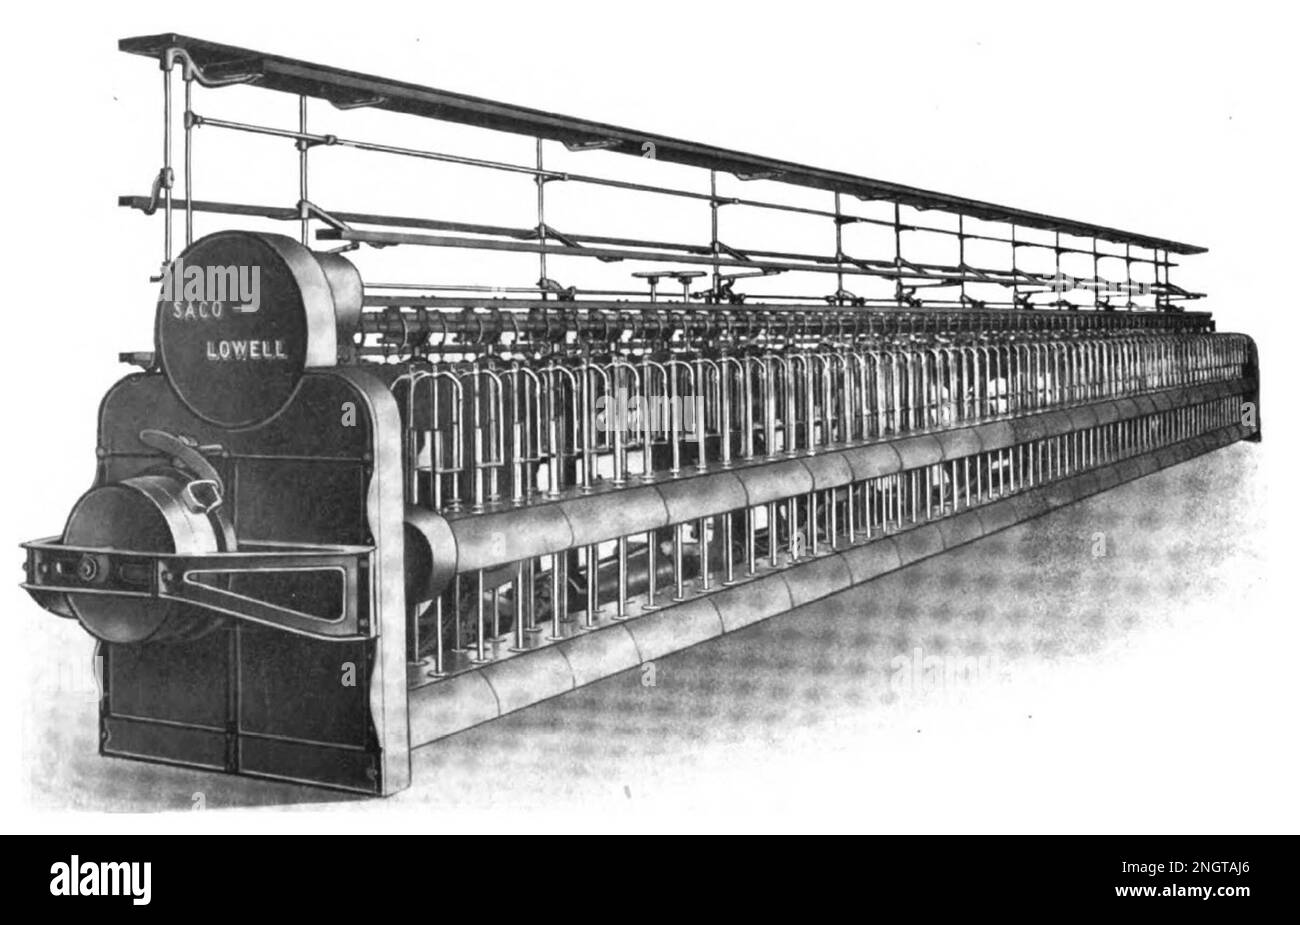 A Saco-Lowell roving frame, ca. 1920 Stock Photo